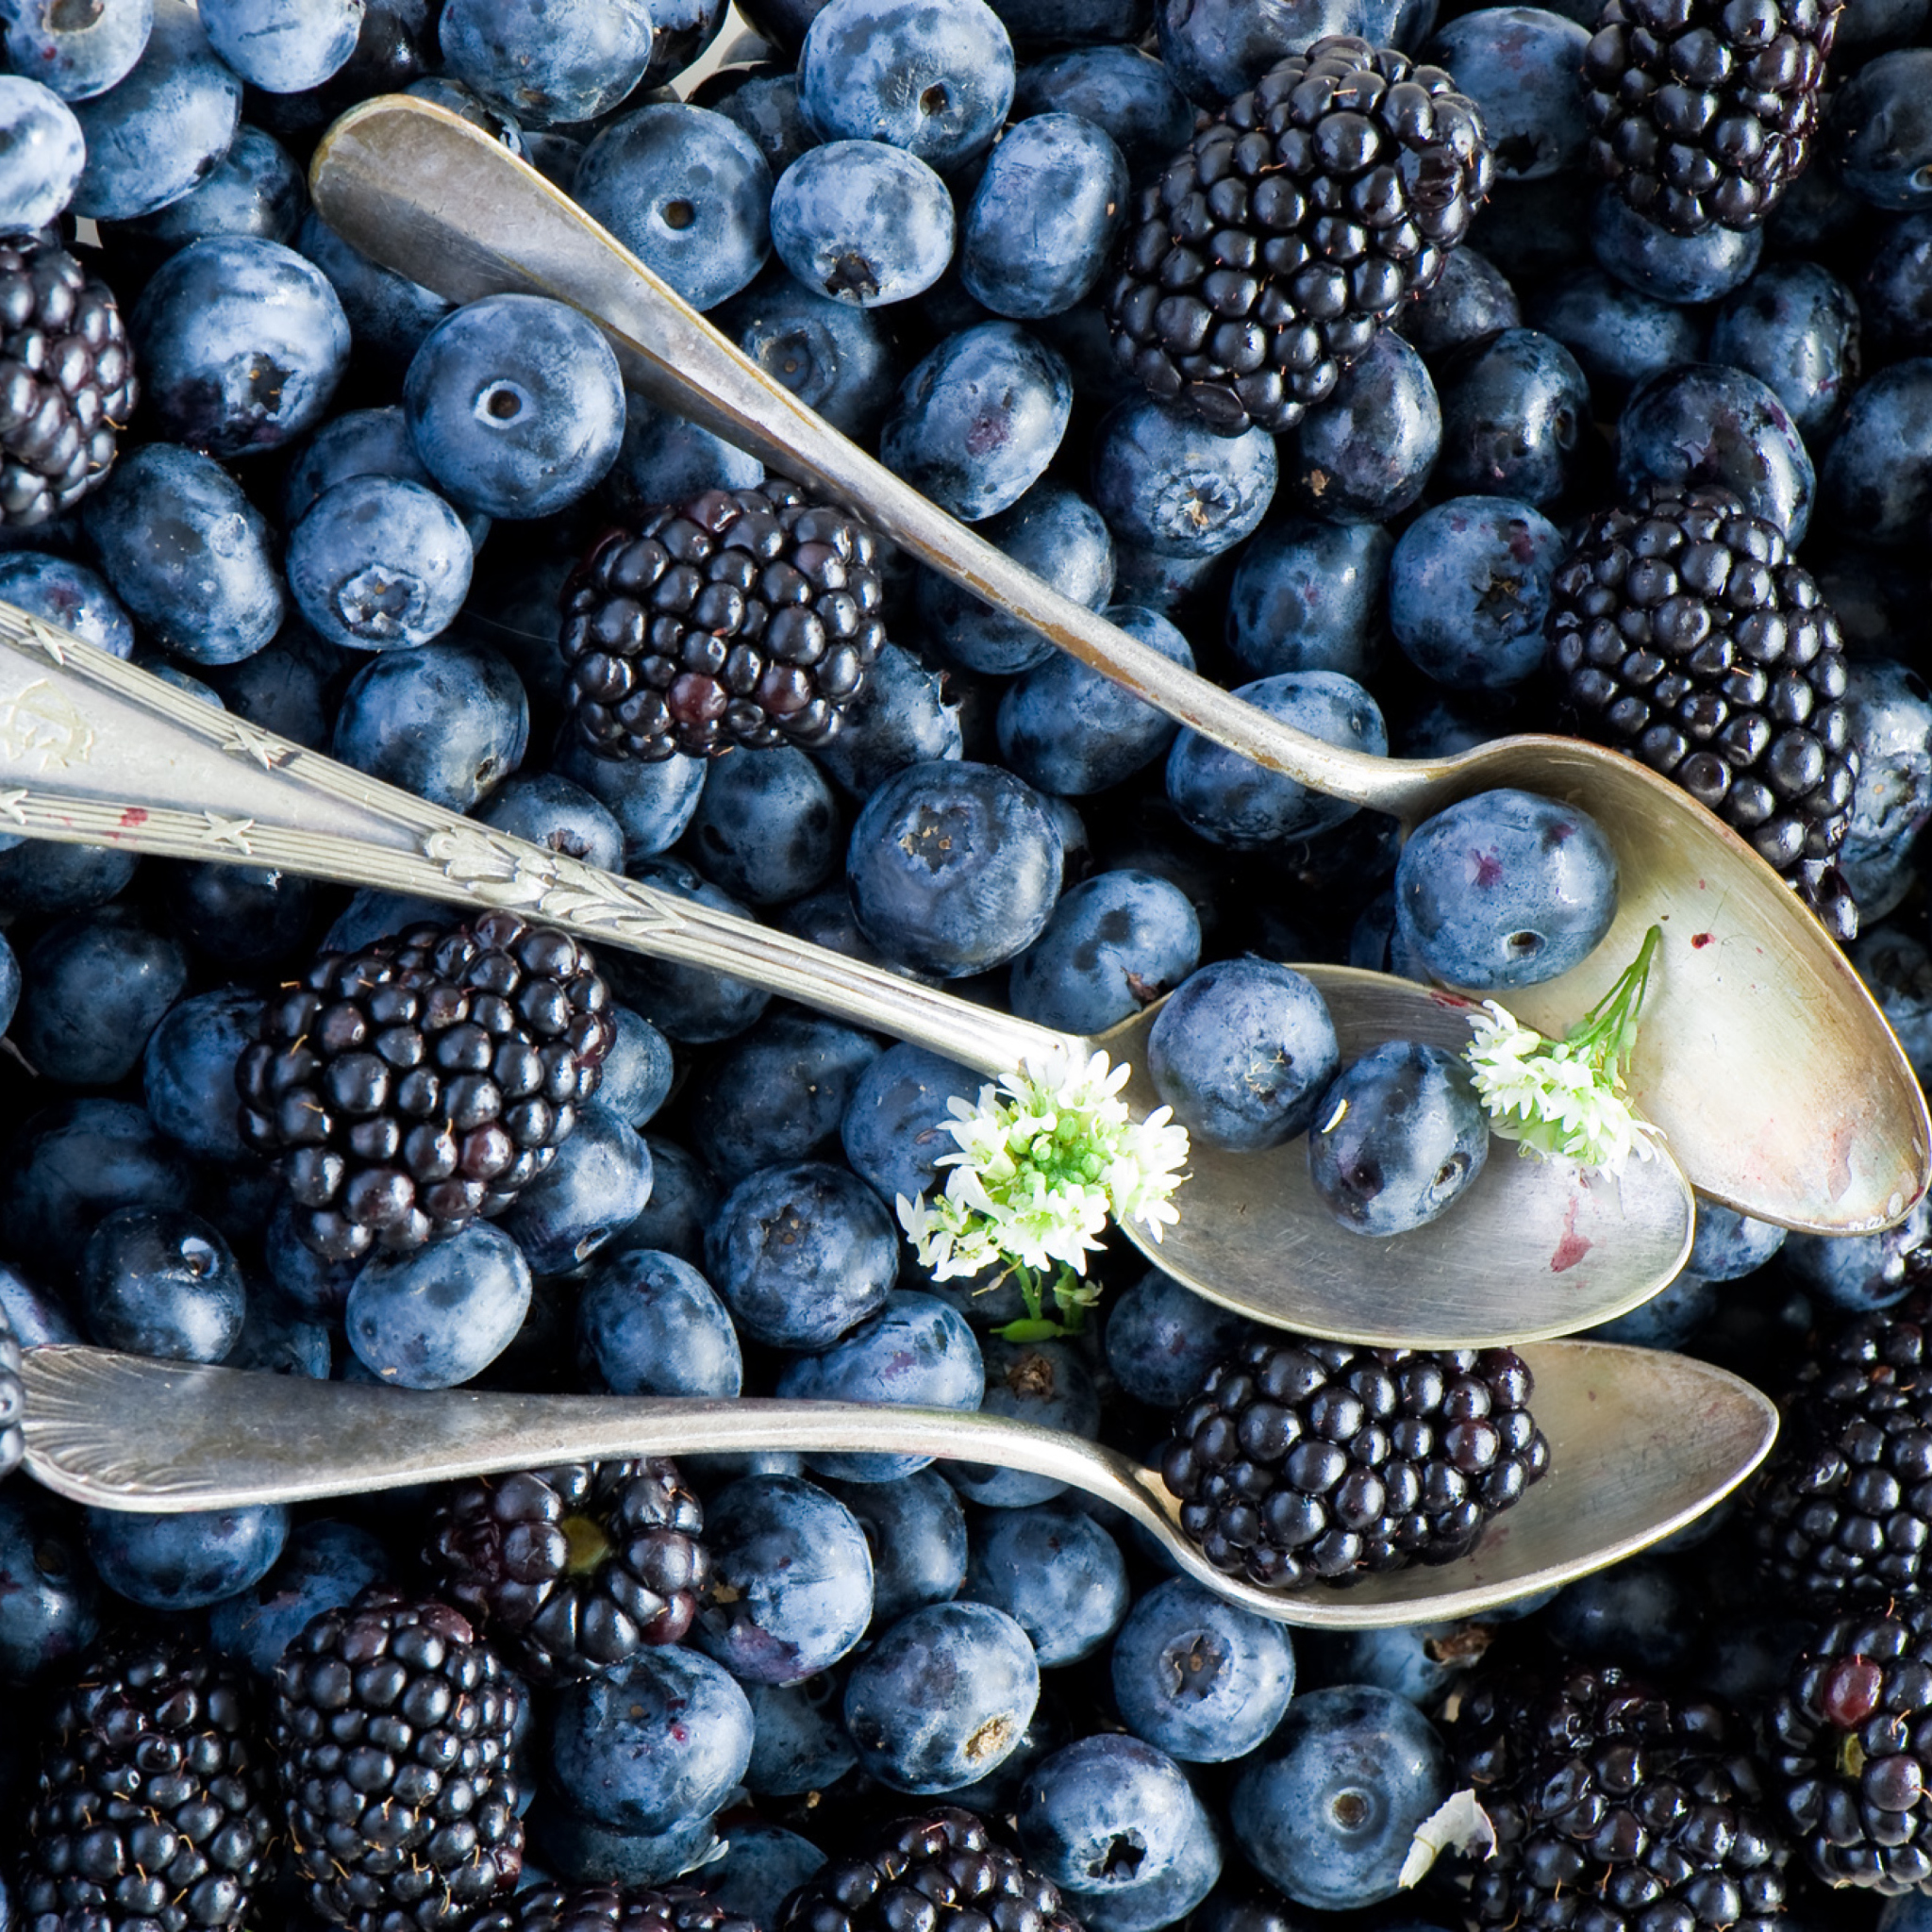 Sfondi Blueberries And Blackberries 2048x2048